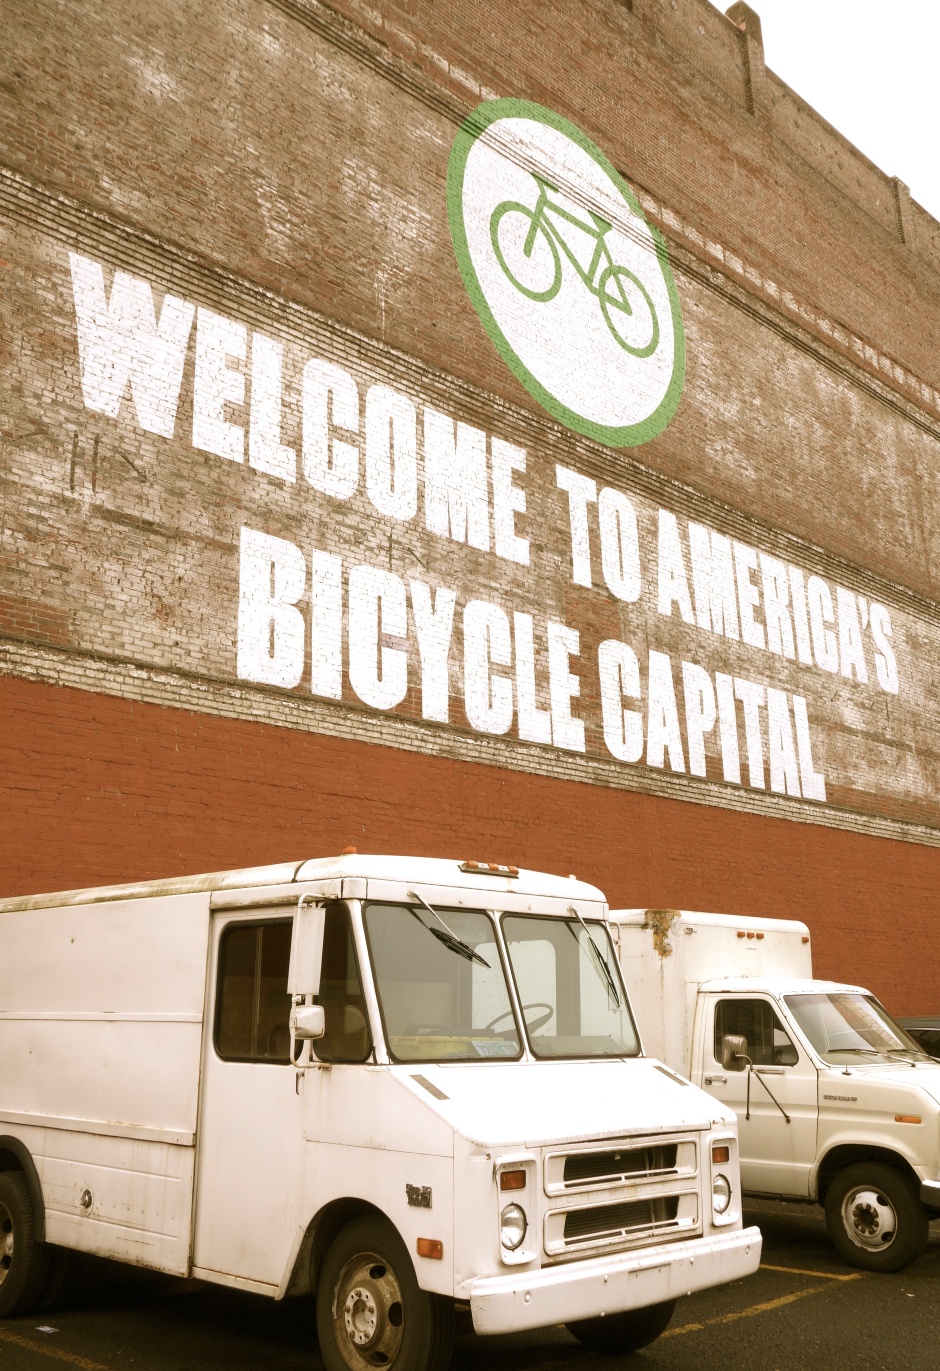 Portland America's bicycle capital